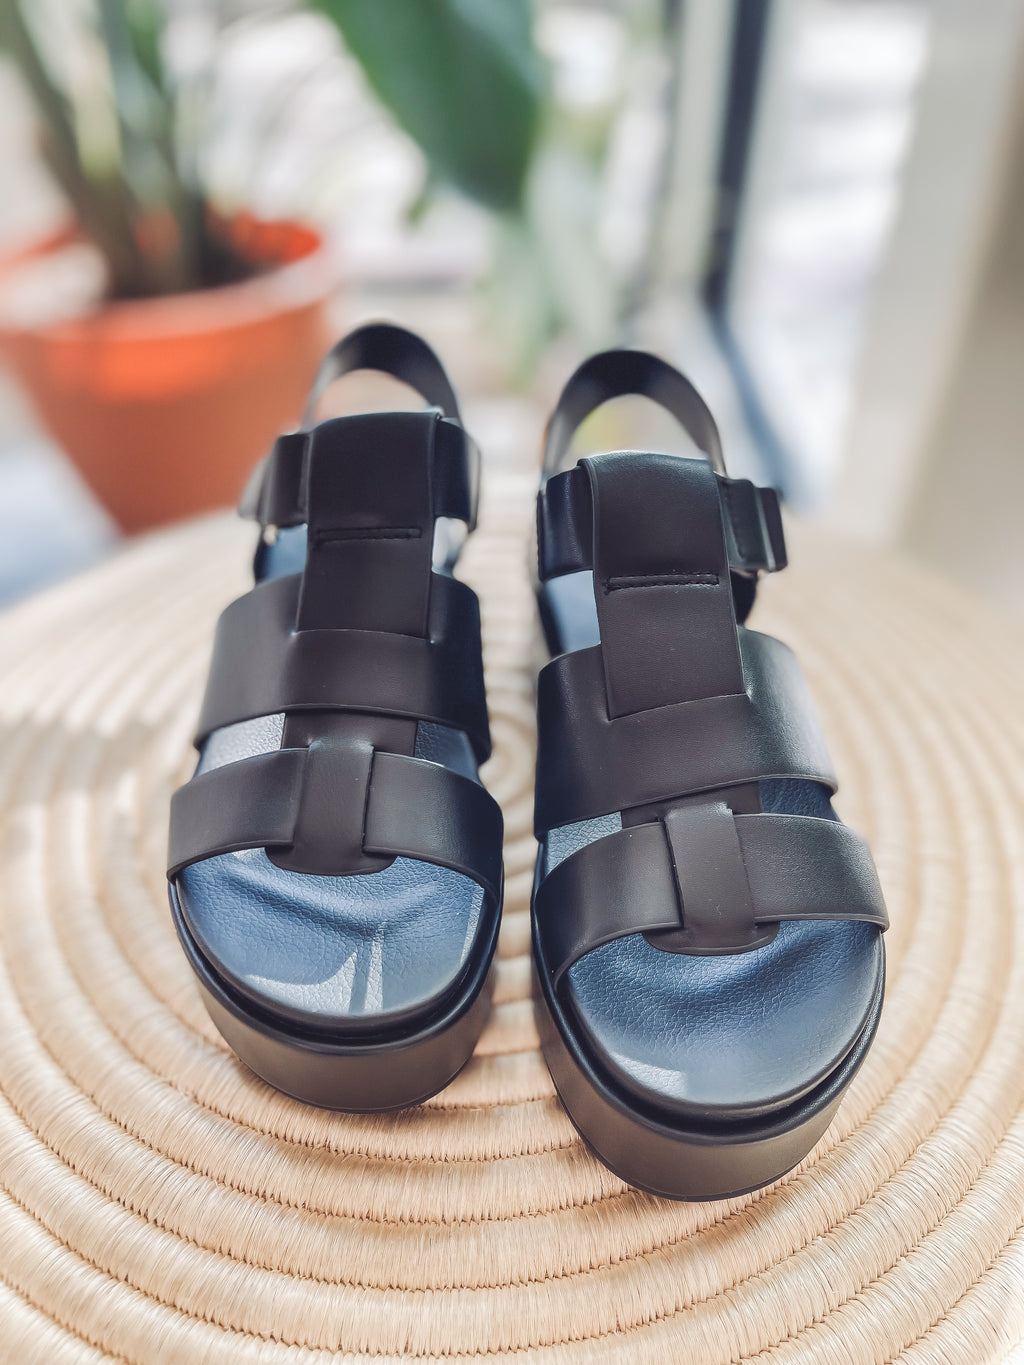 Perfectly fine platform sandals